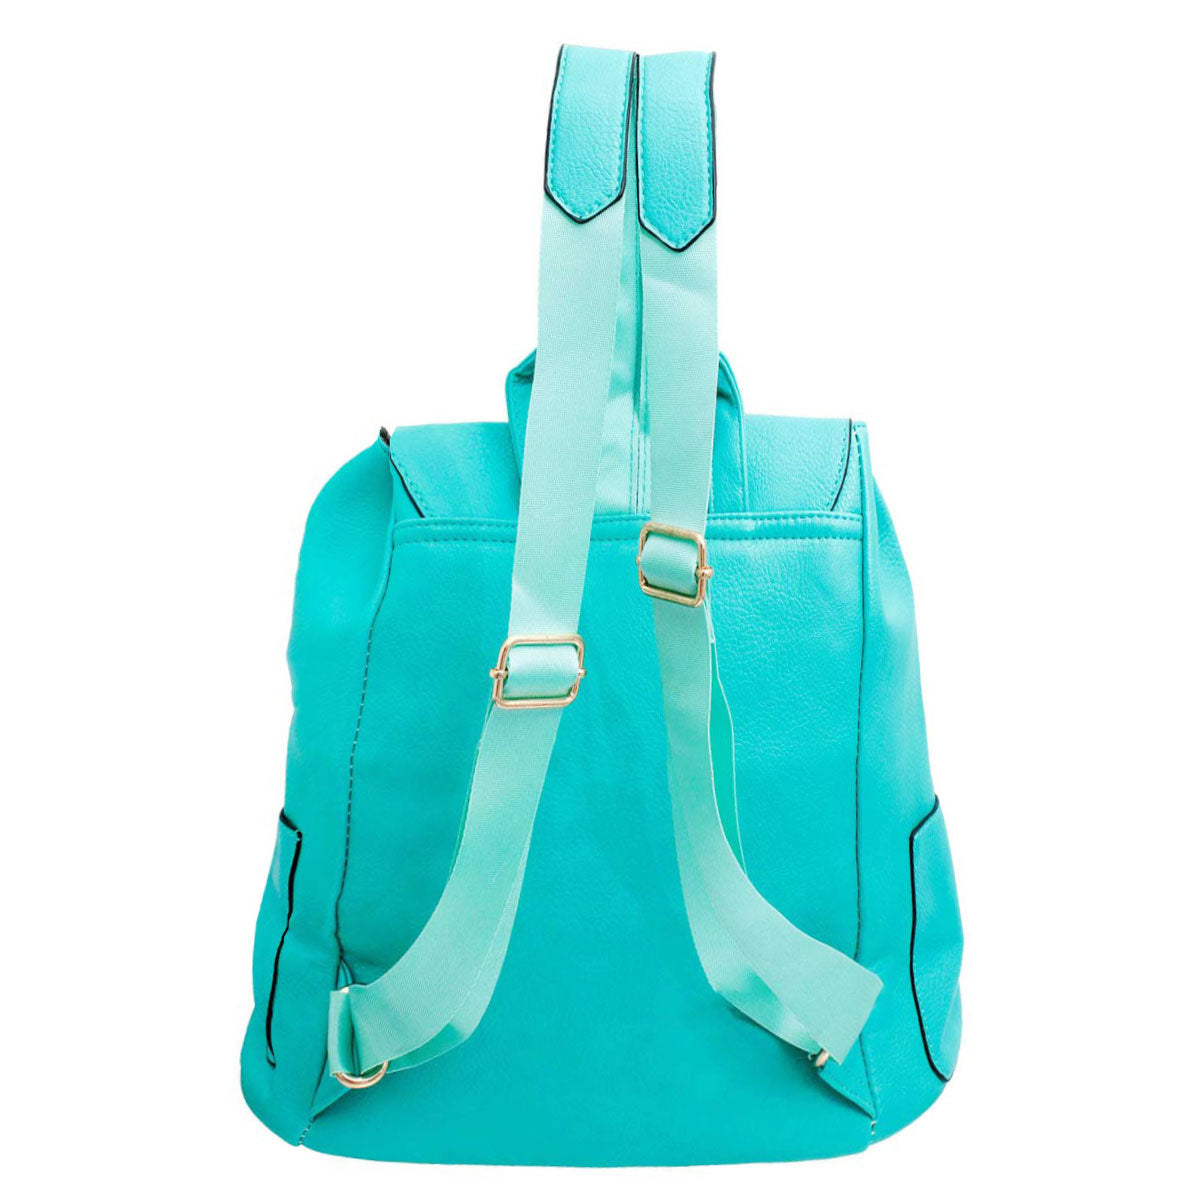 Aqua Buckle Flap Backpack